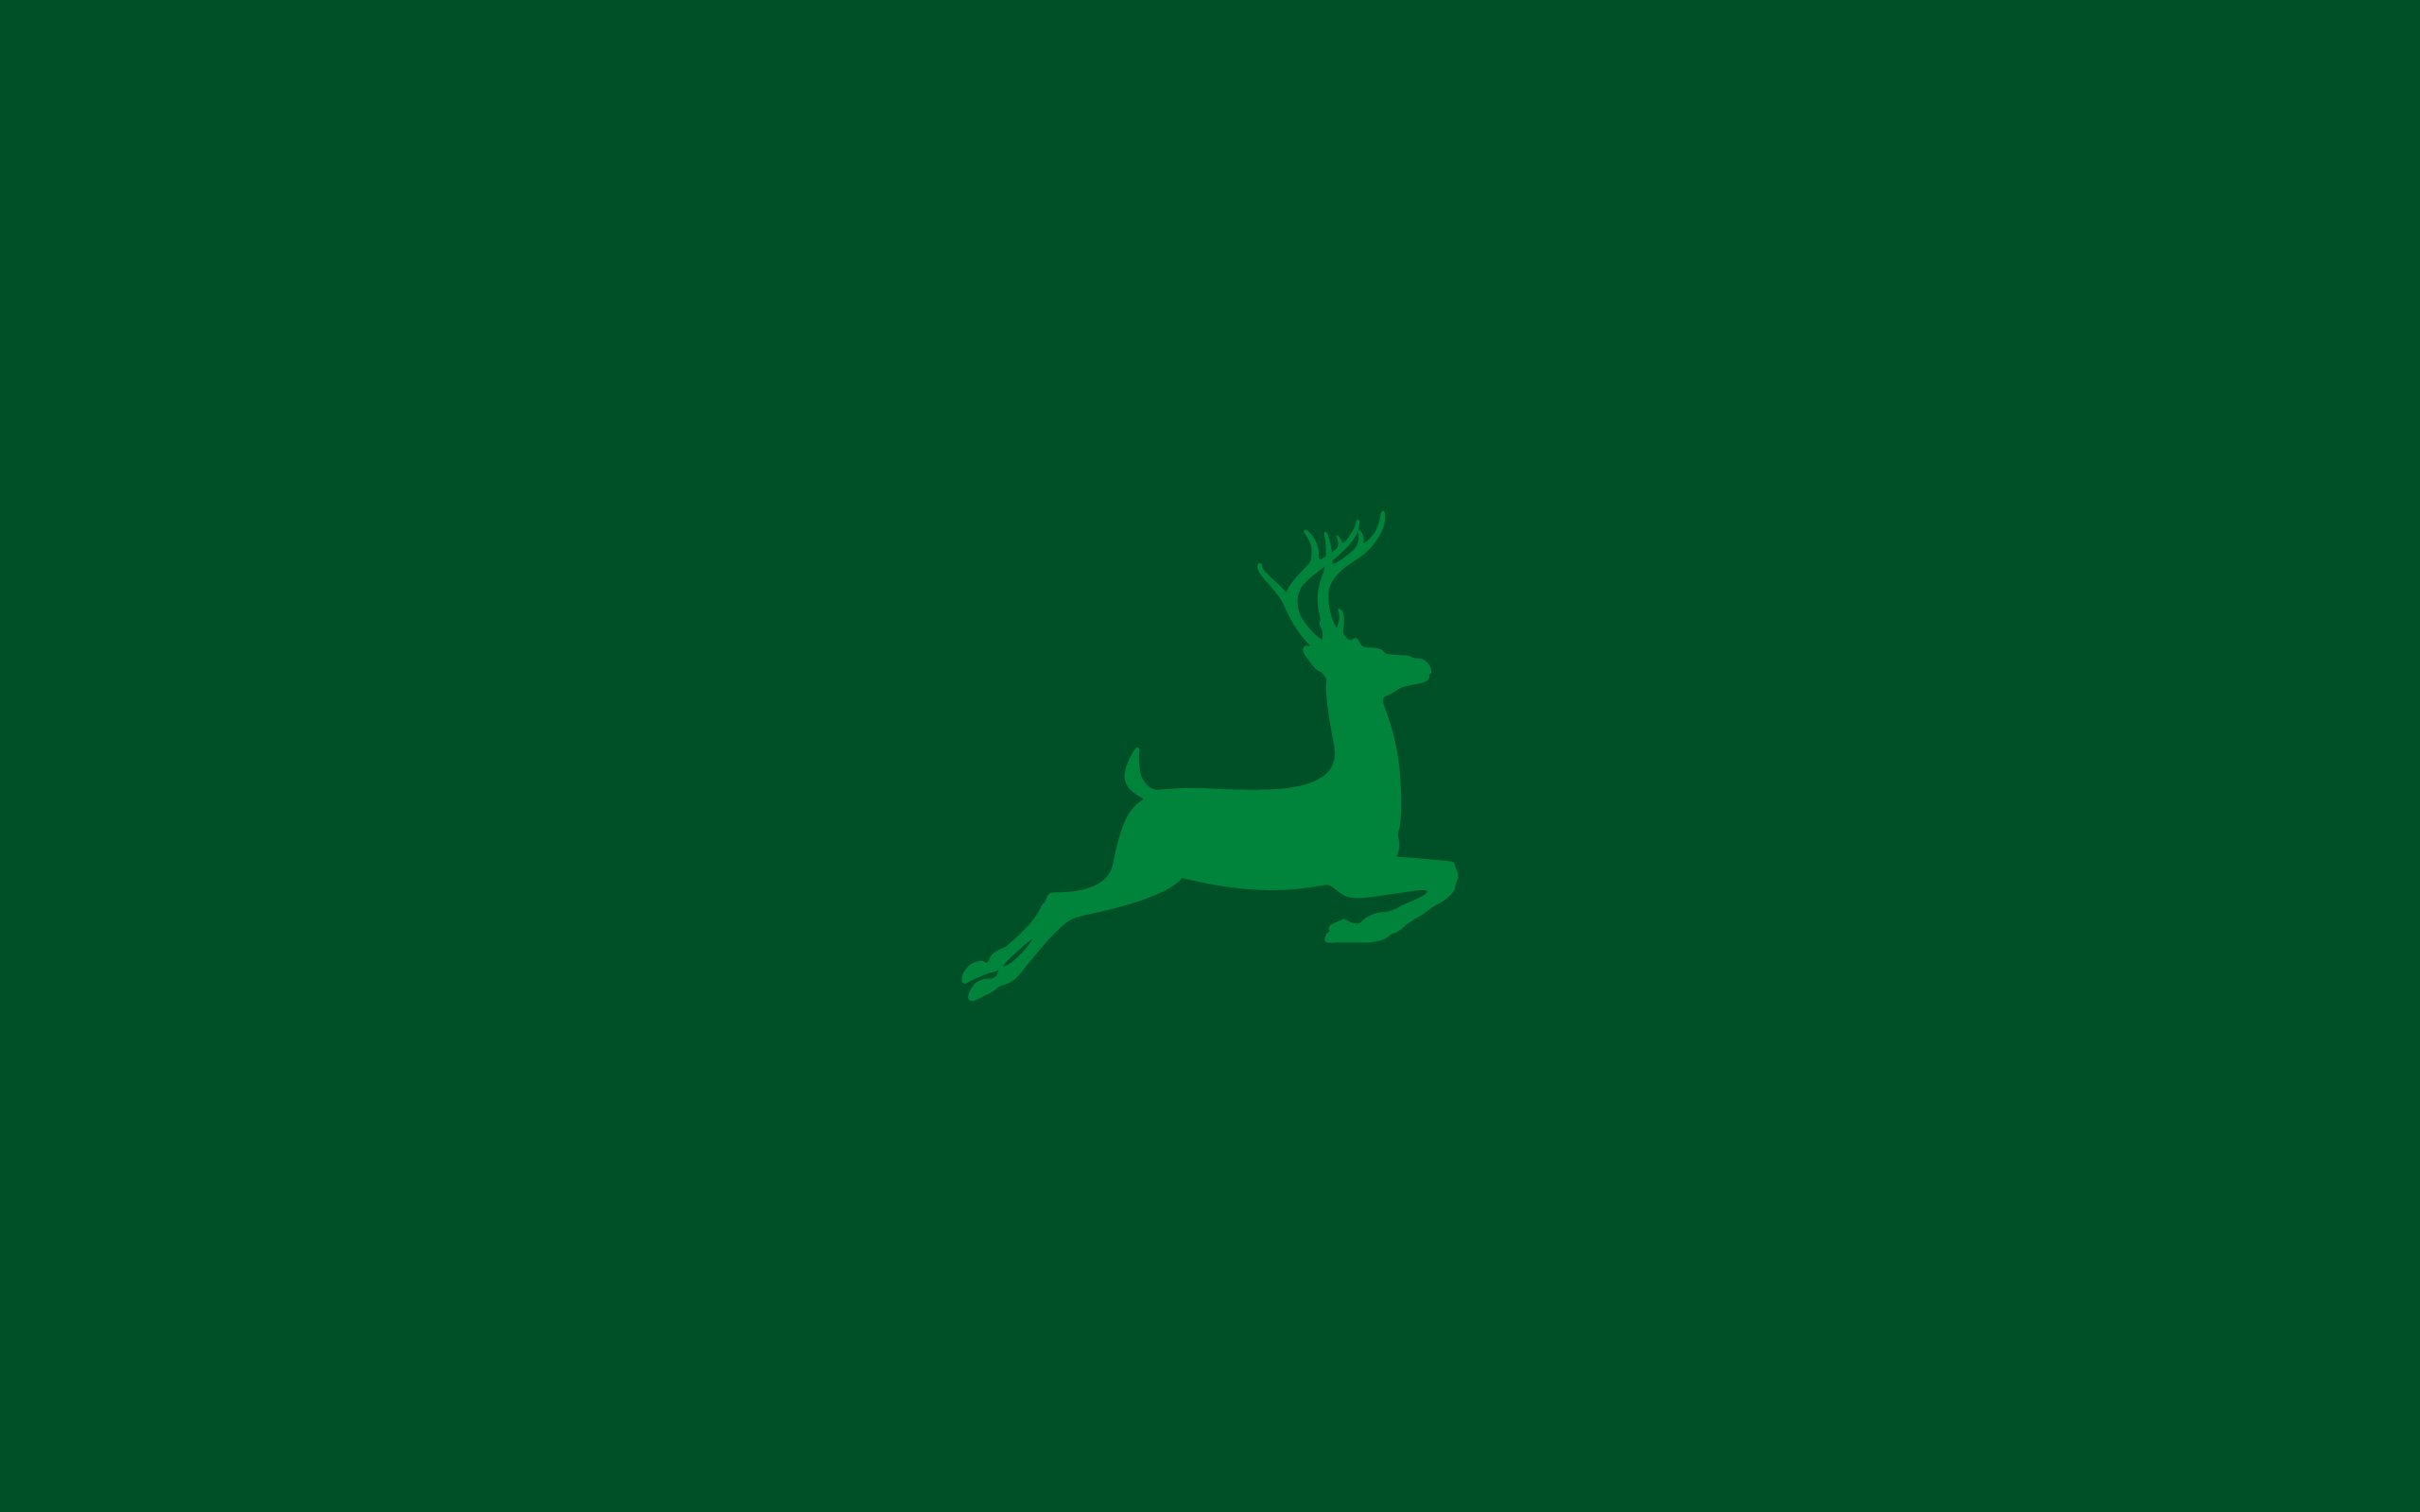 Растровый клипарт, эмблема оленя на зеленом фоне, минимализм, заставки на экран, Raster clipart, emblem of a deer on a green background, minimalism, screen saver